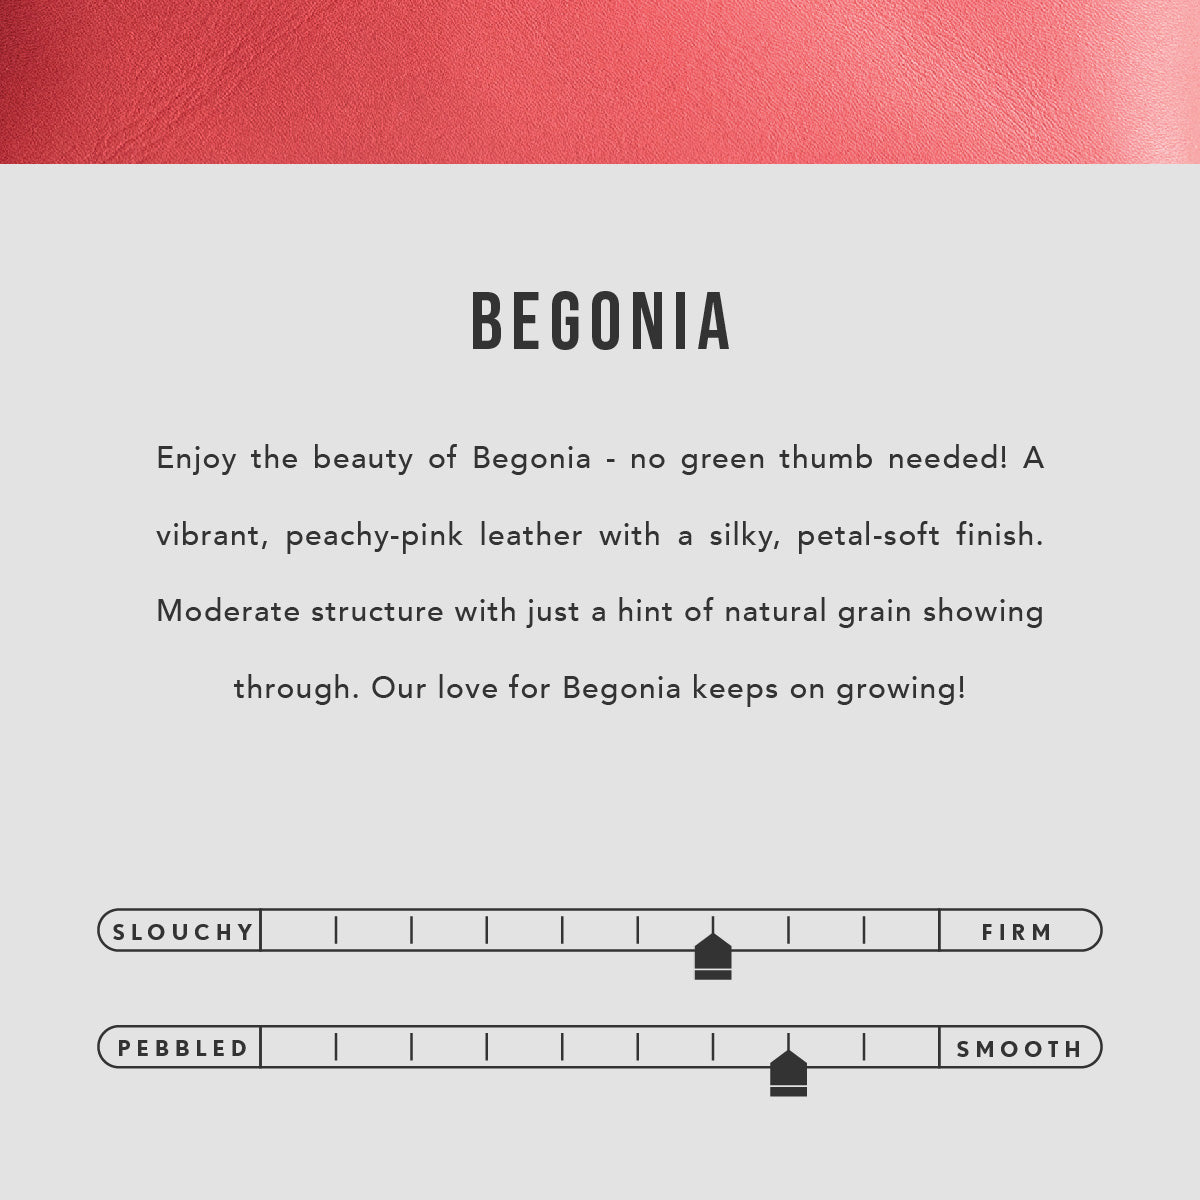 Begonia | infographic